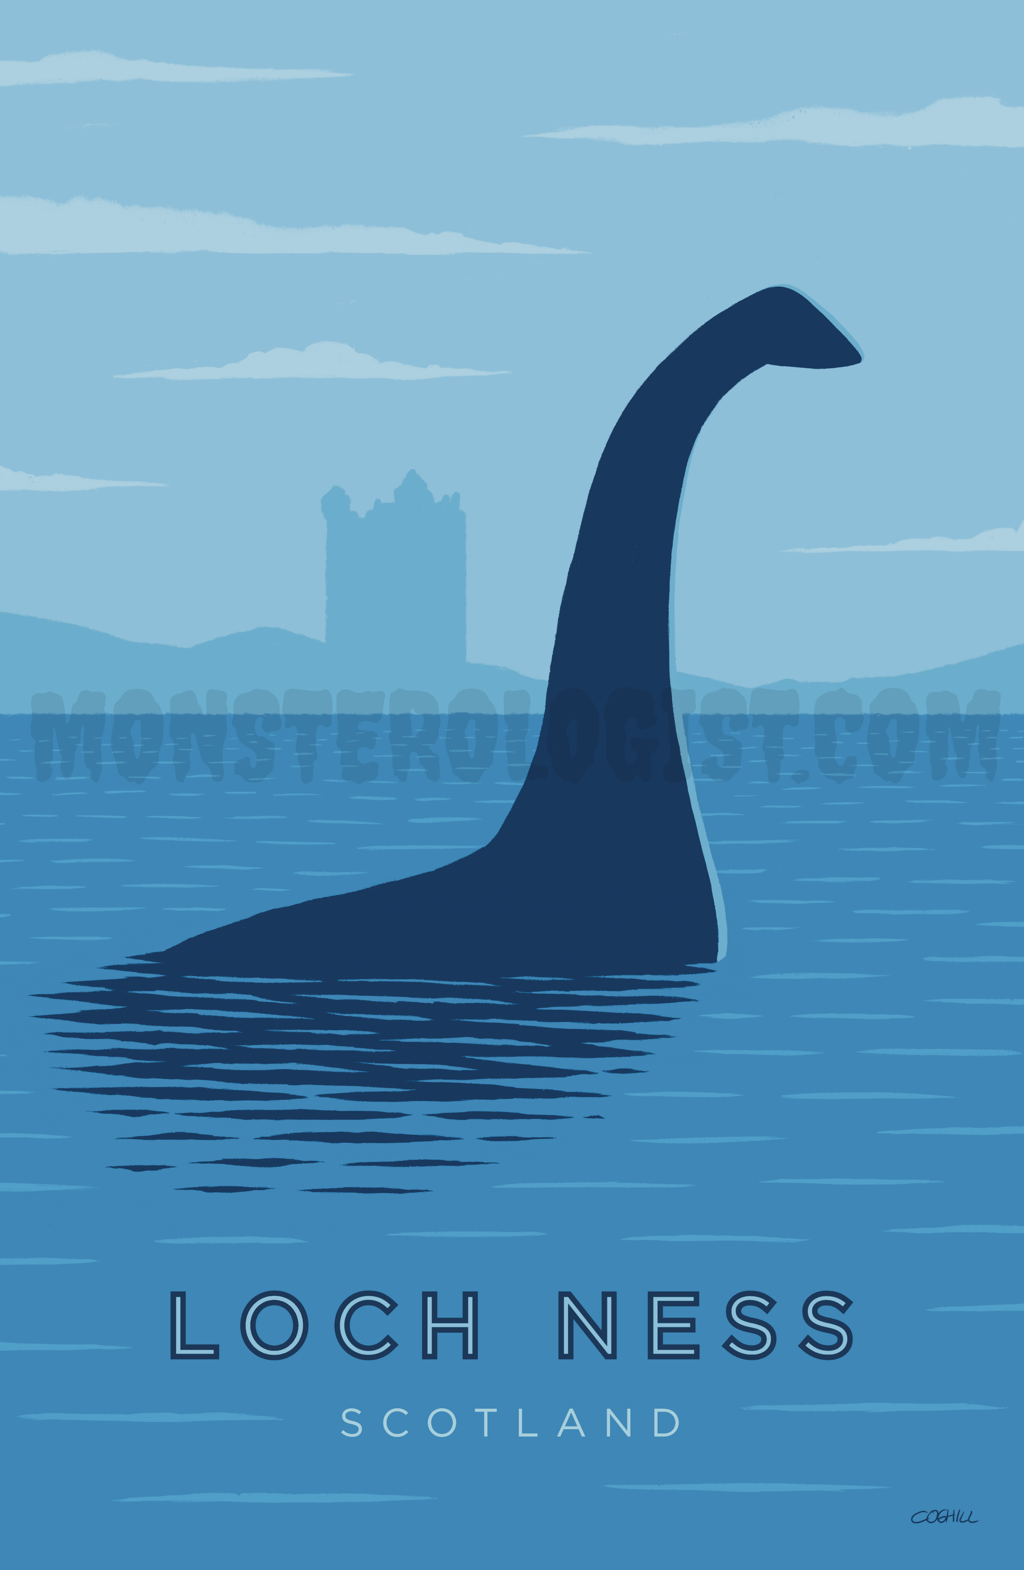 Loch Ness Scotland Nessie vintage travel poster by Monsterologist. 